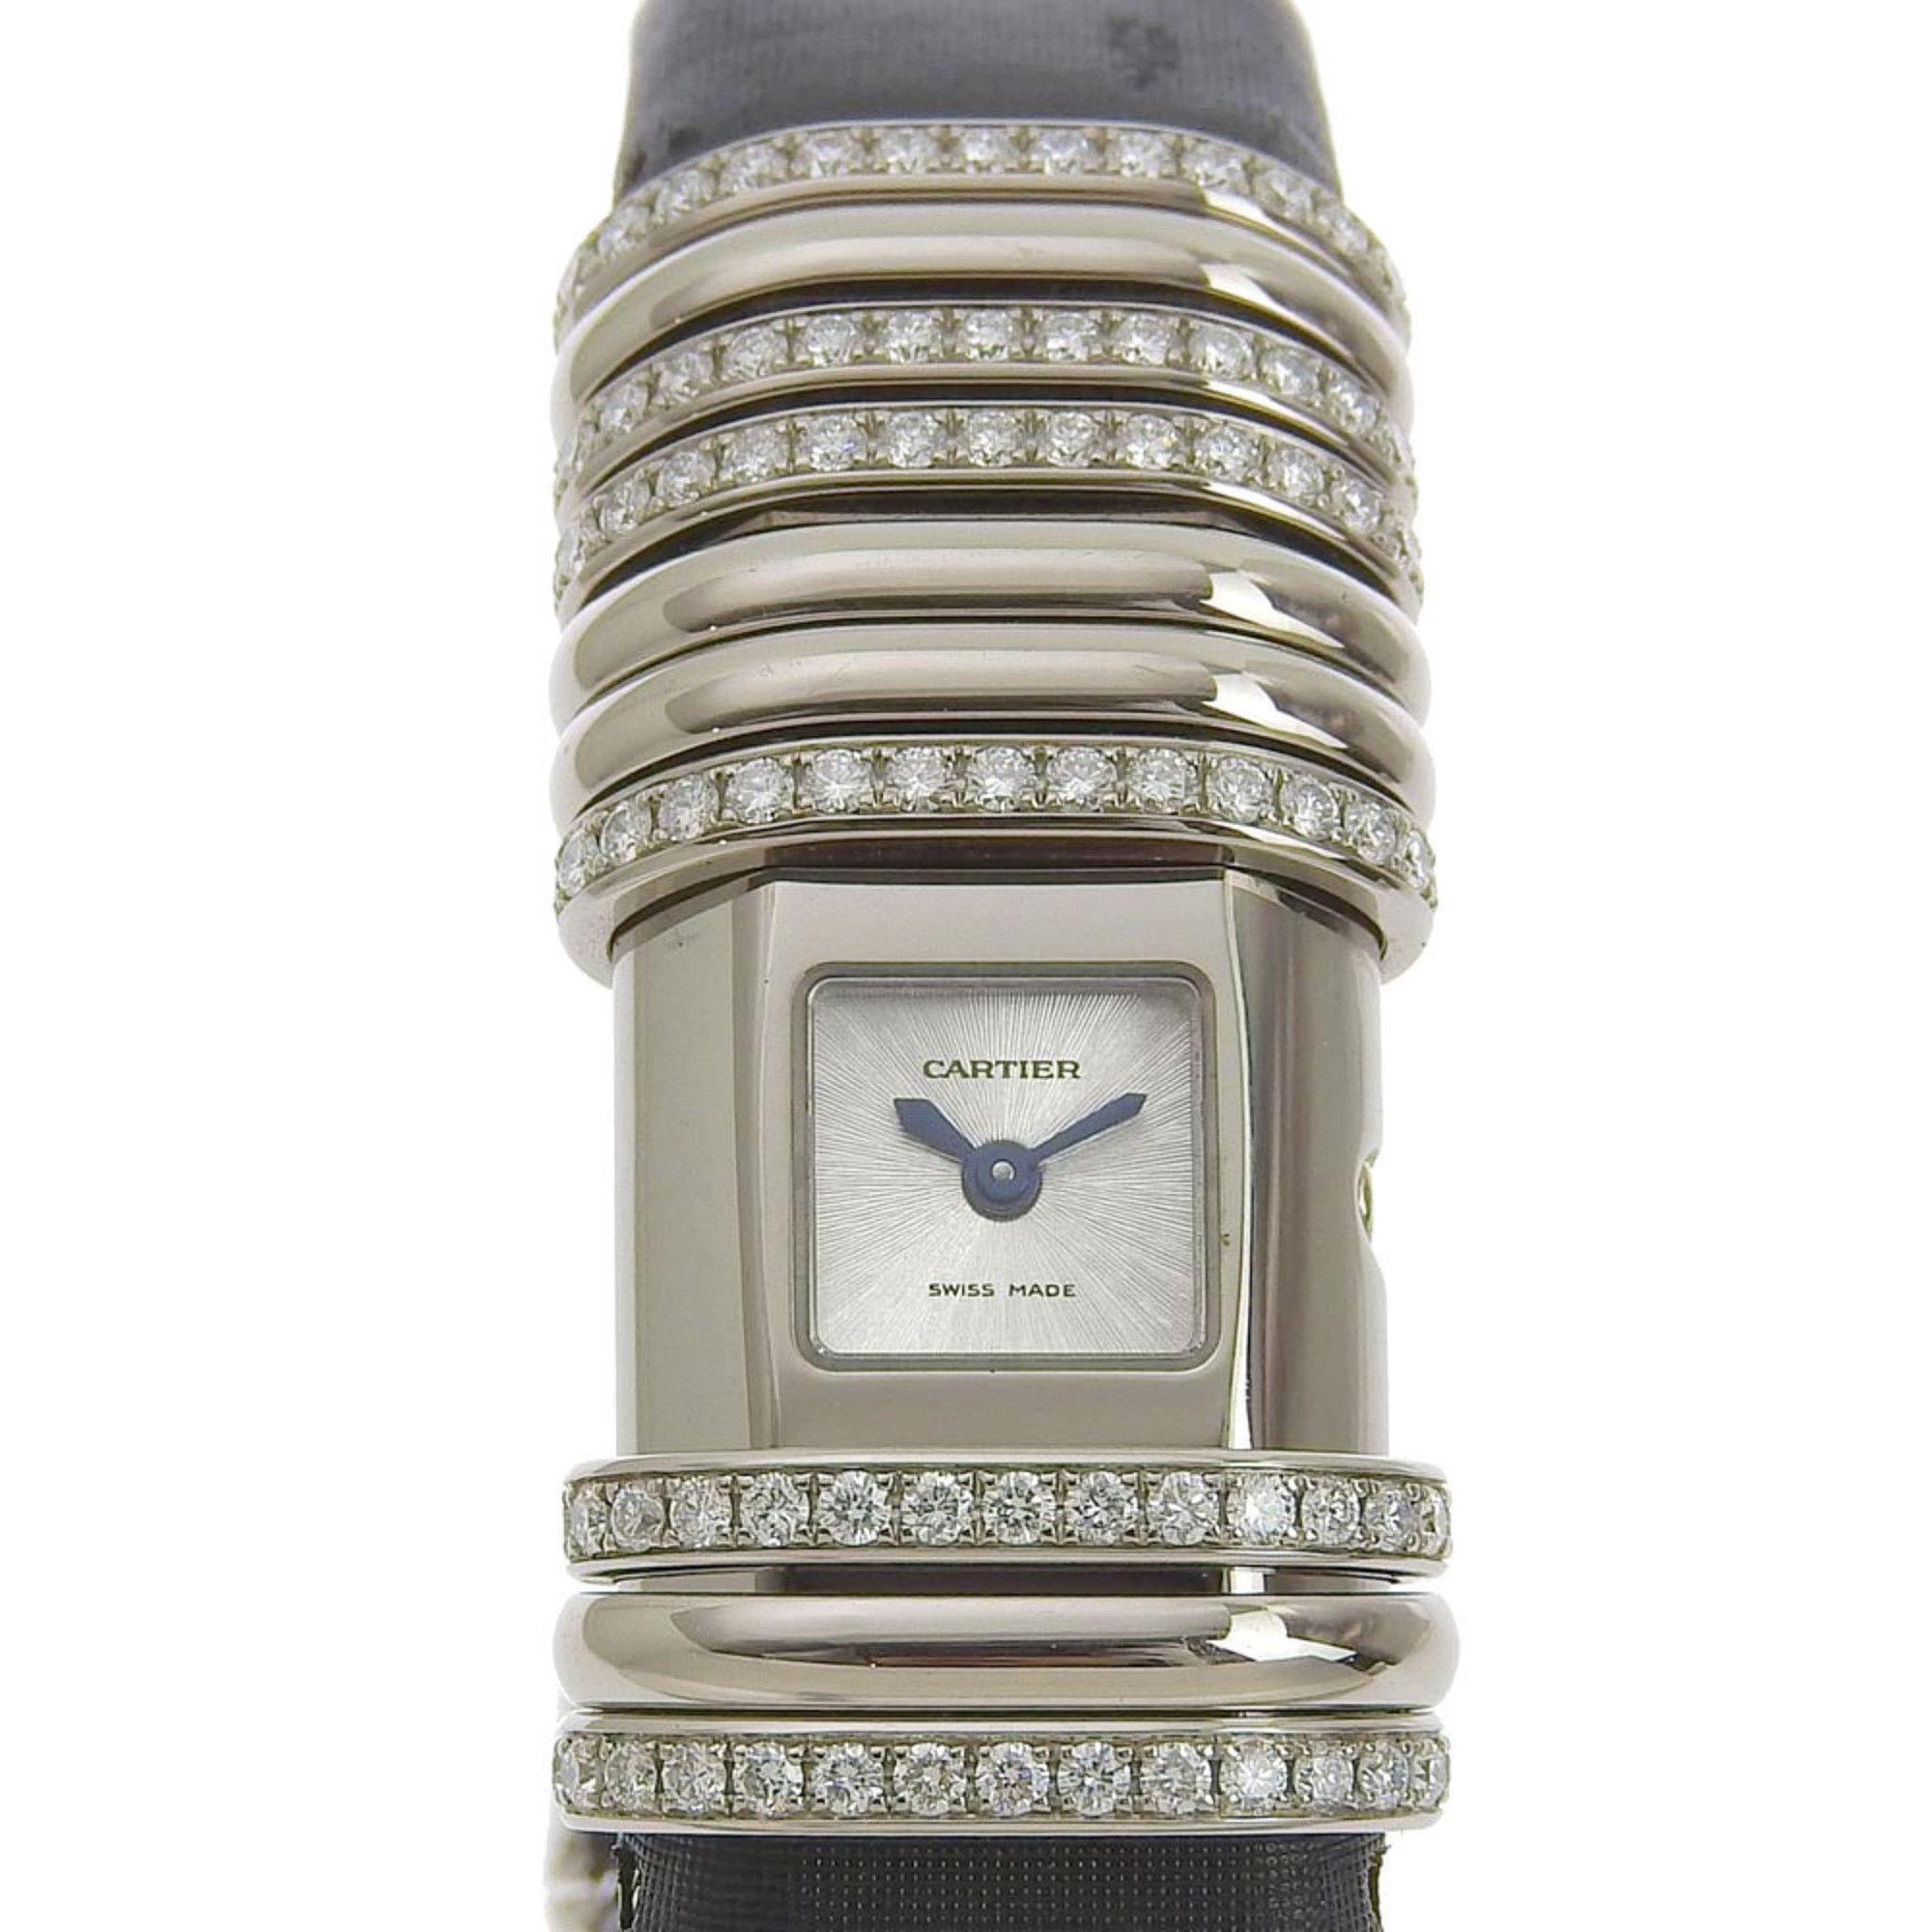 Cartier CARTIER Declaration Watch WT000450 Titanium x K18 White Gold Diamond Silver Quartz Analog Display Dial Ladies